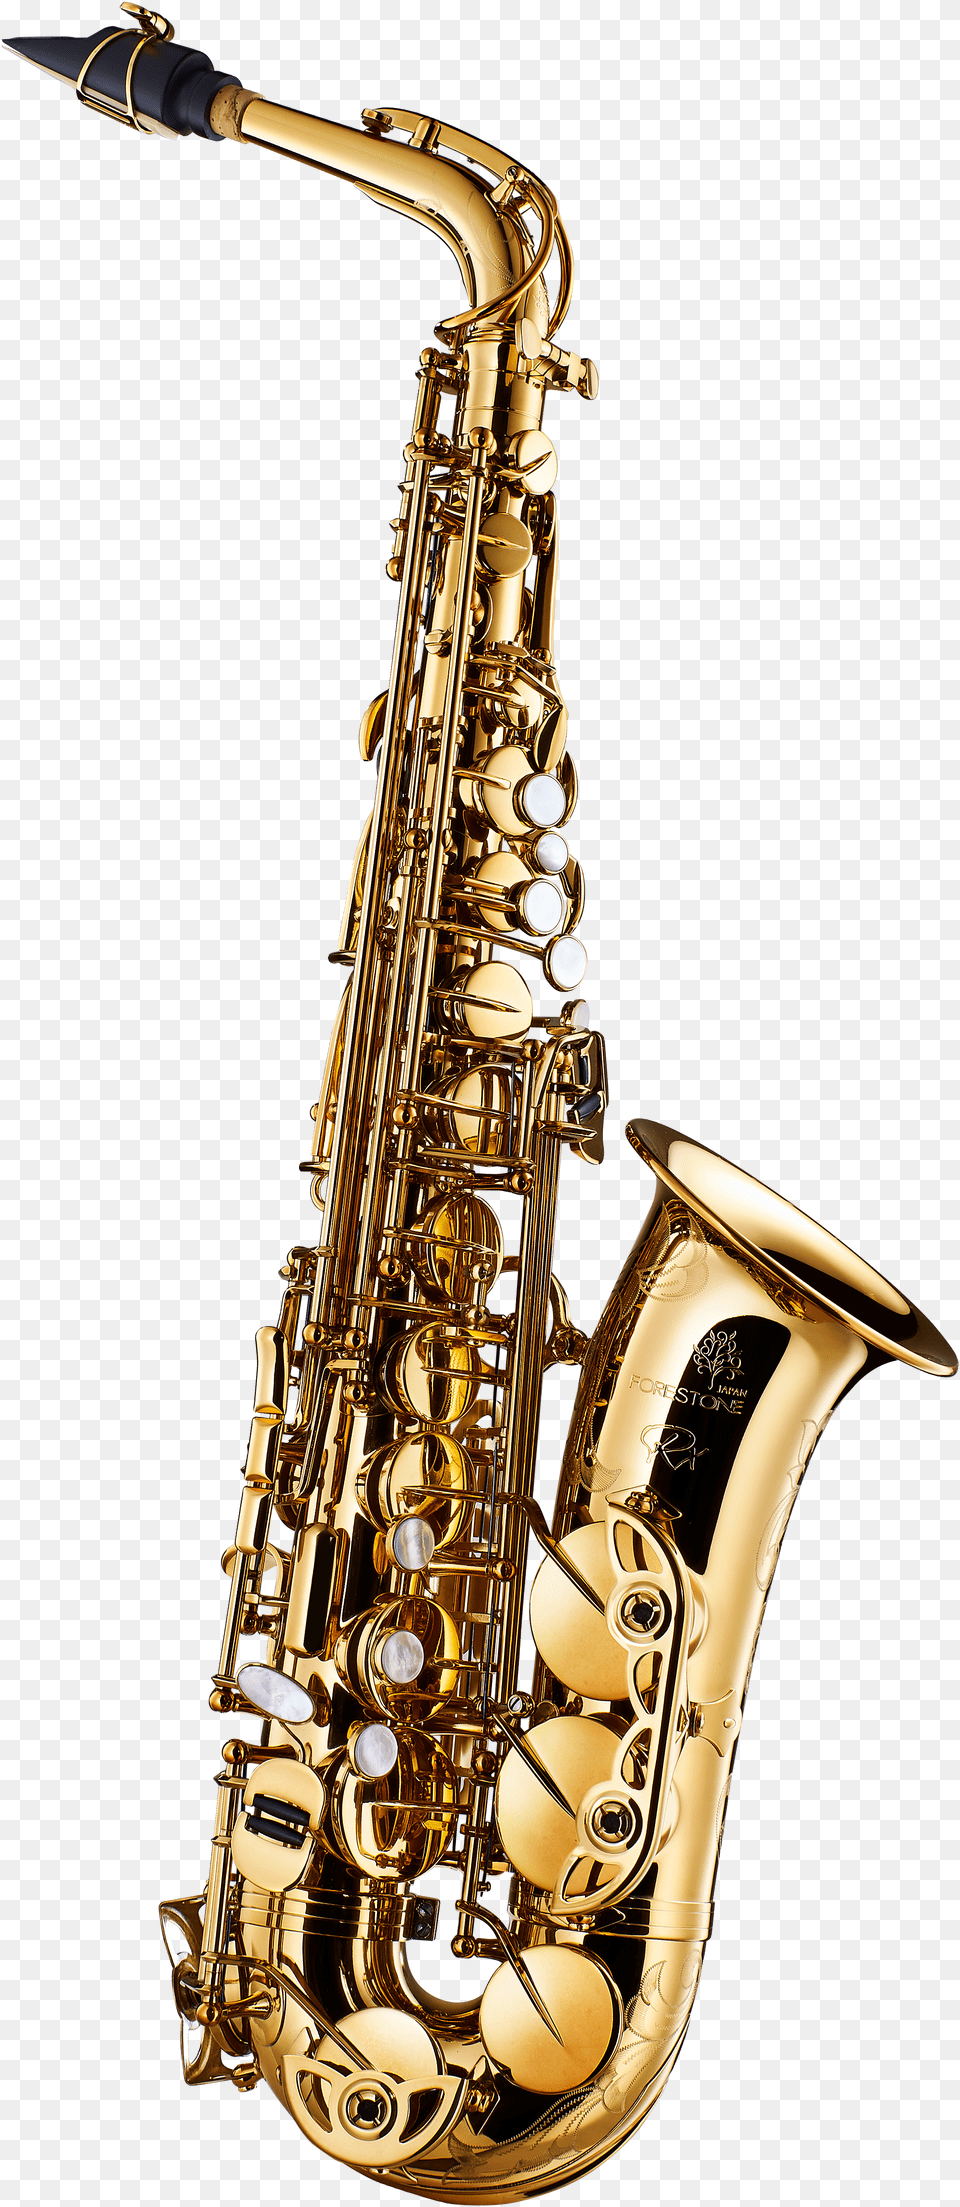 Alto Saxophone Png Image